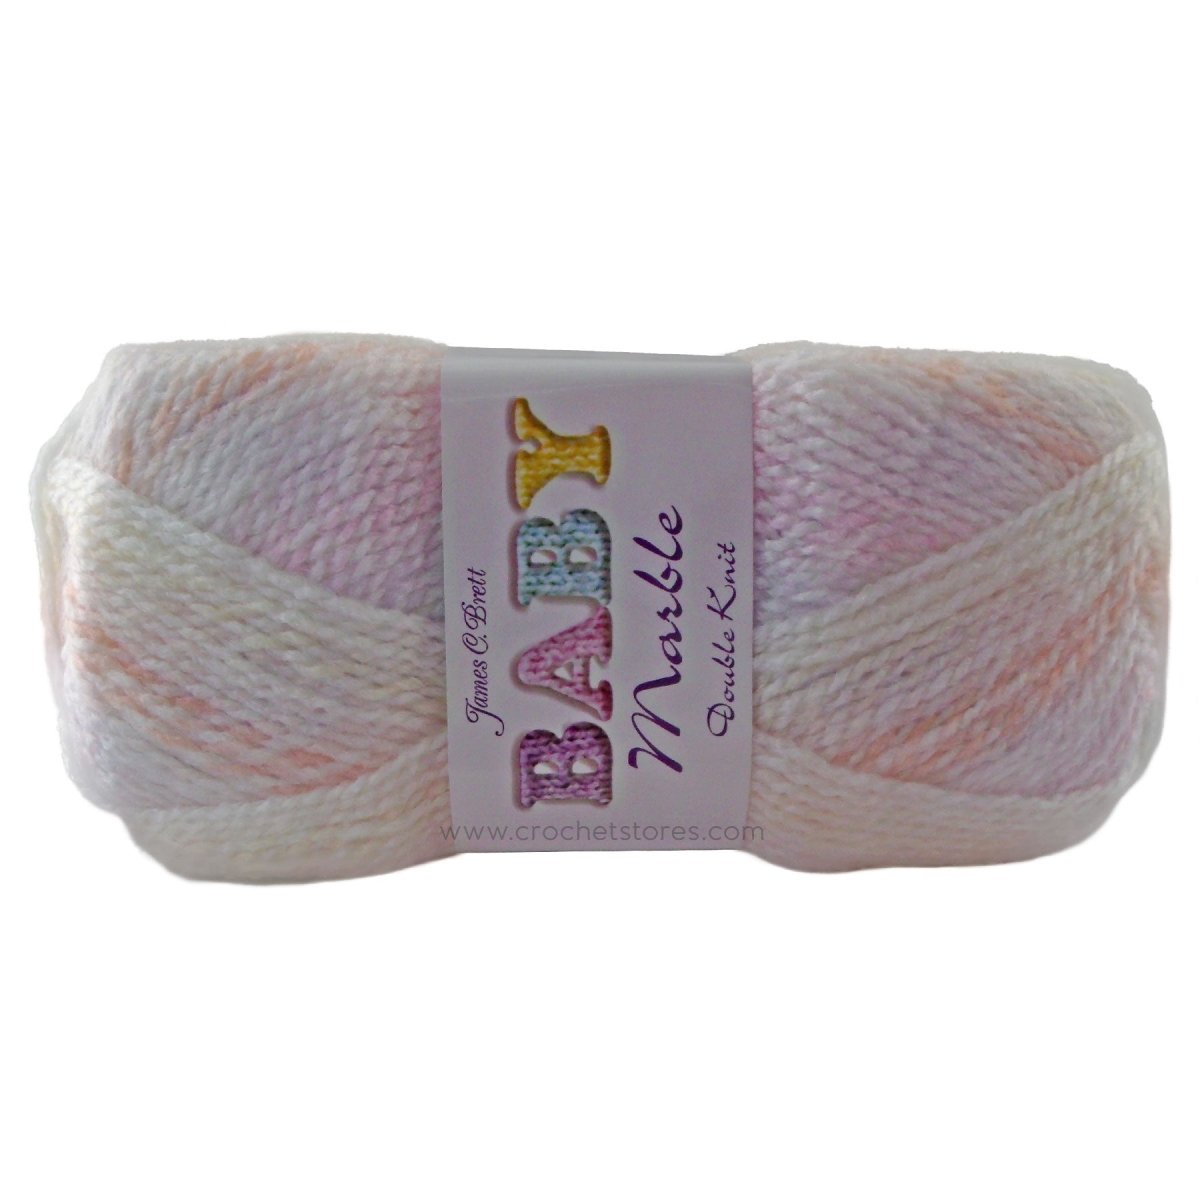 BABY MARBLE DK - CrochetstoresBM55060019097045